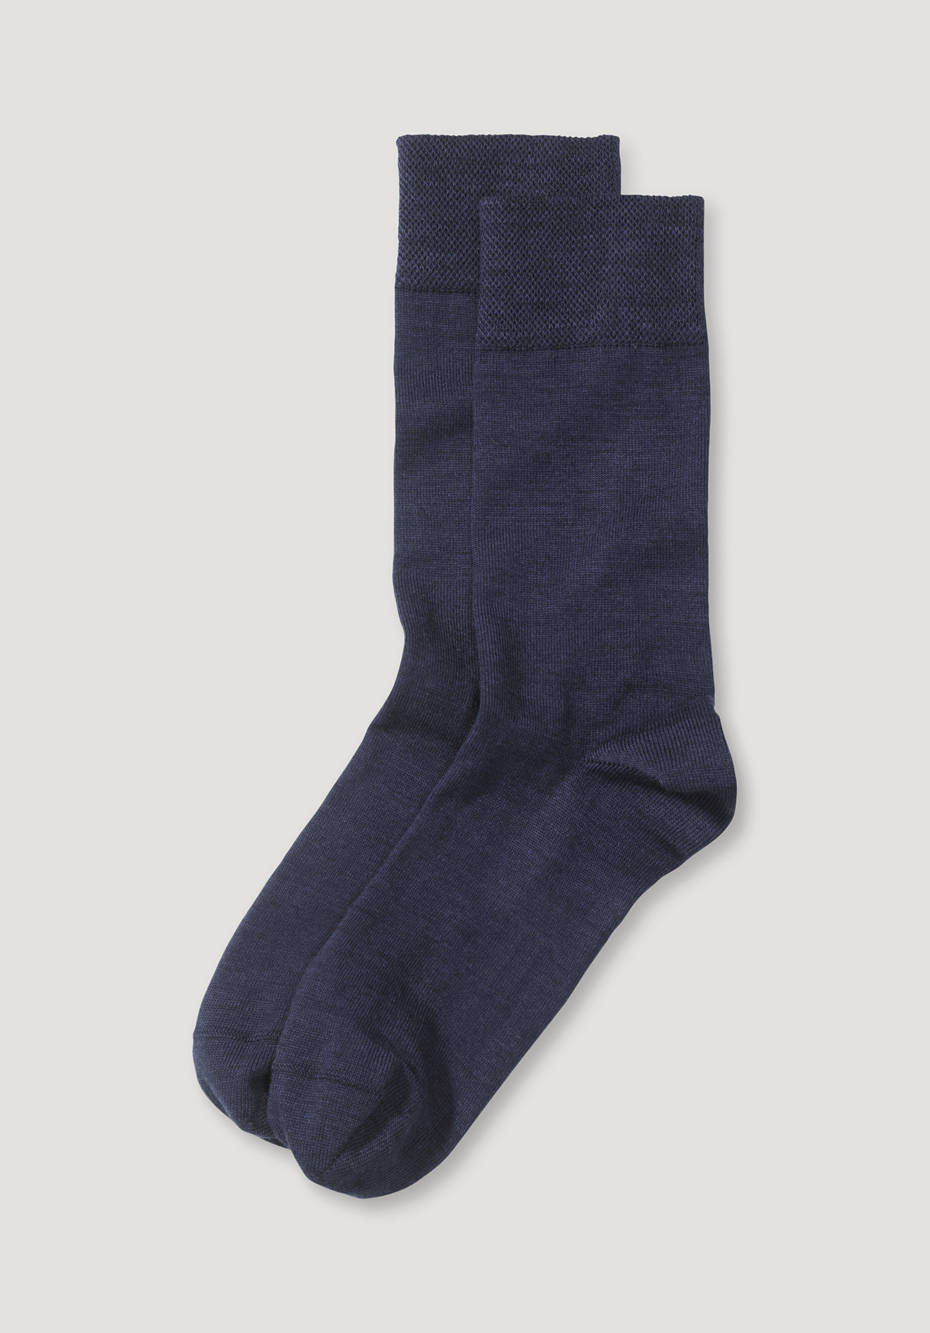 Men's merino socks in a pack of 2 made from organic merino wool with organic cotton